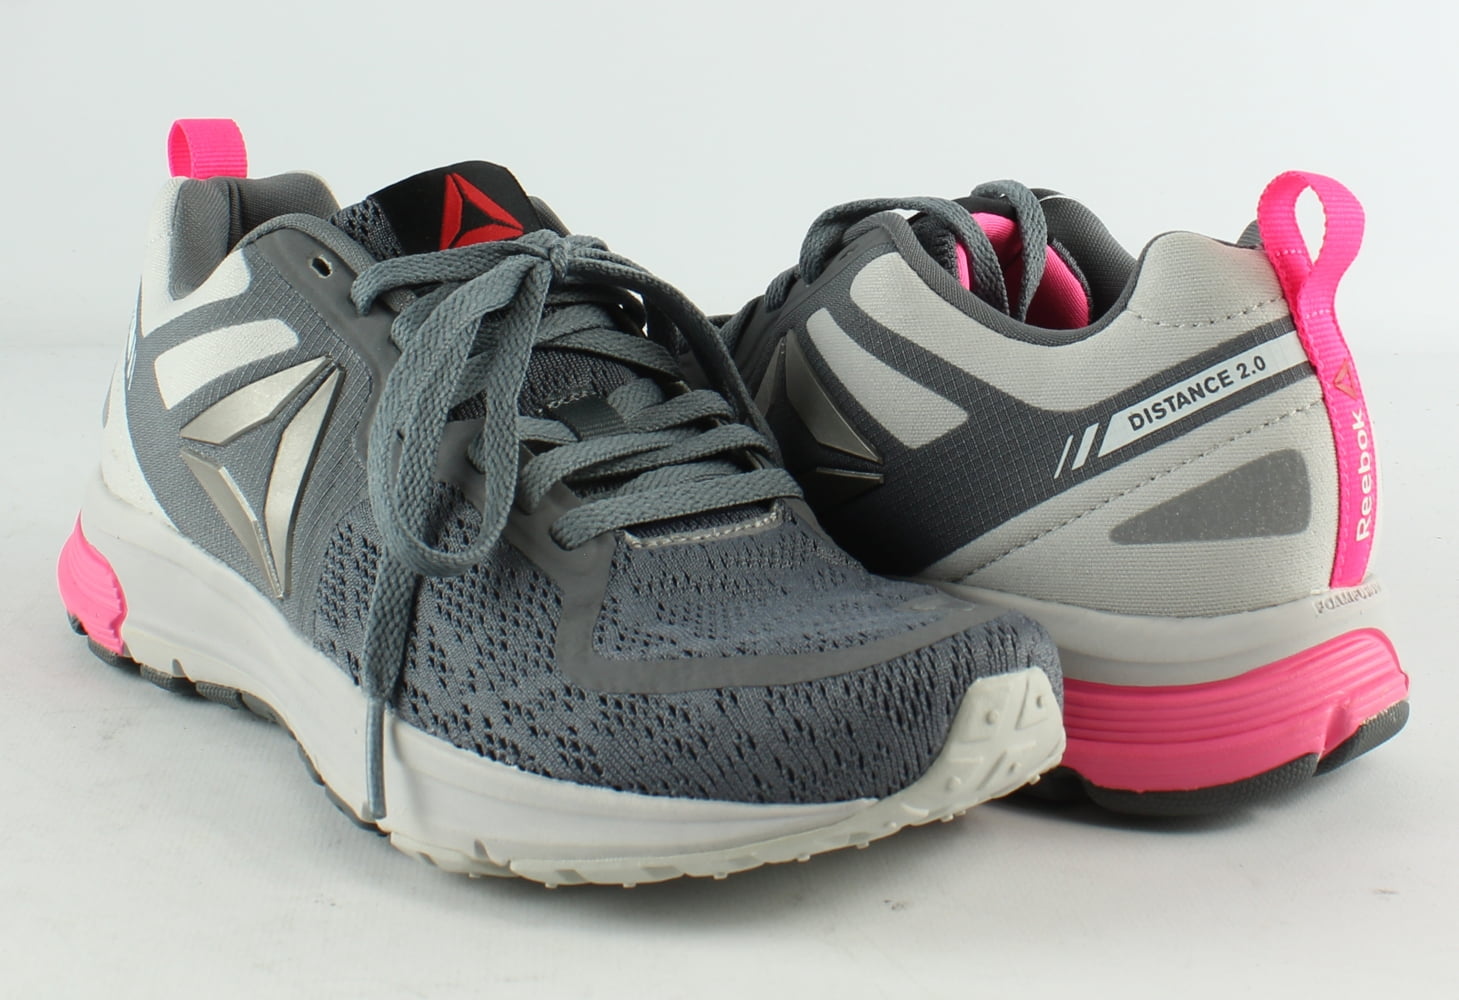 reebok distance 2. gray running shoes